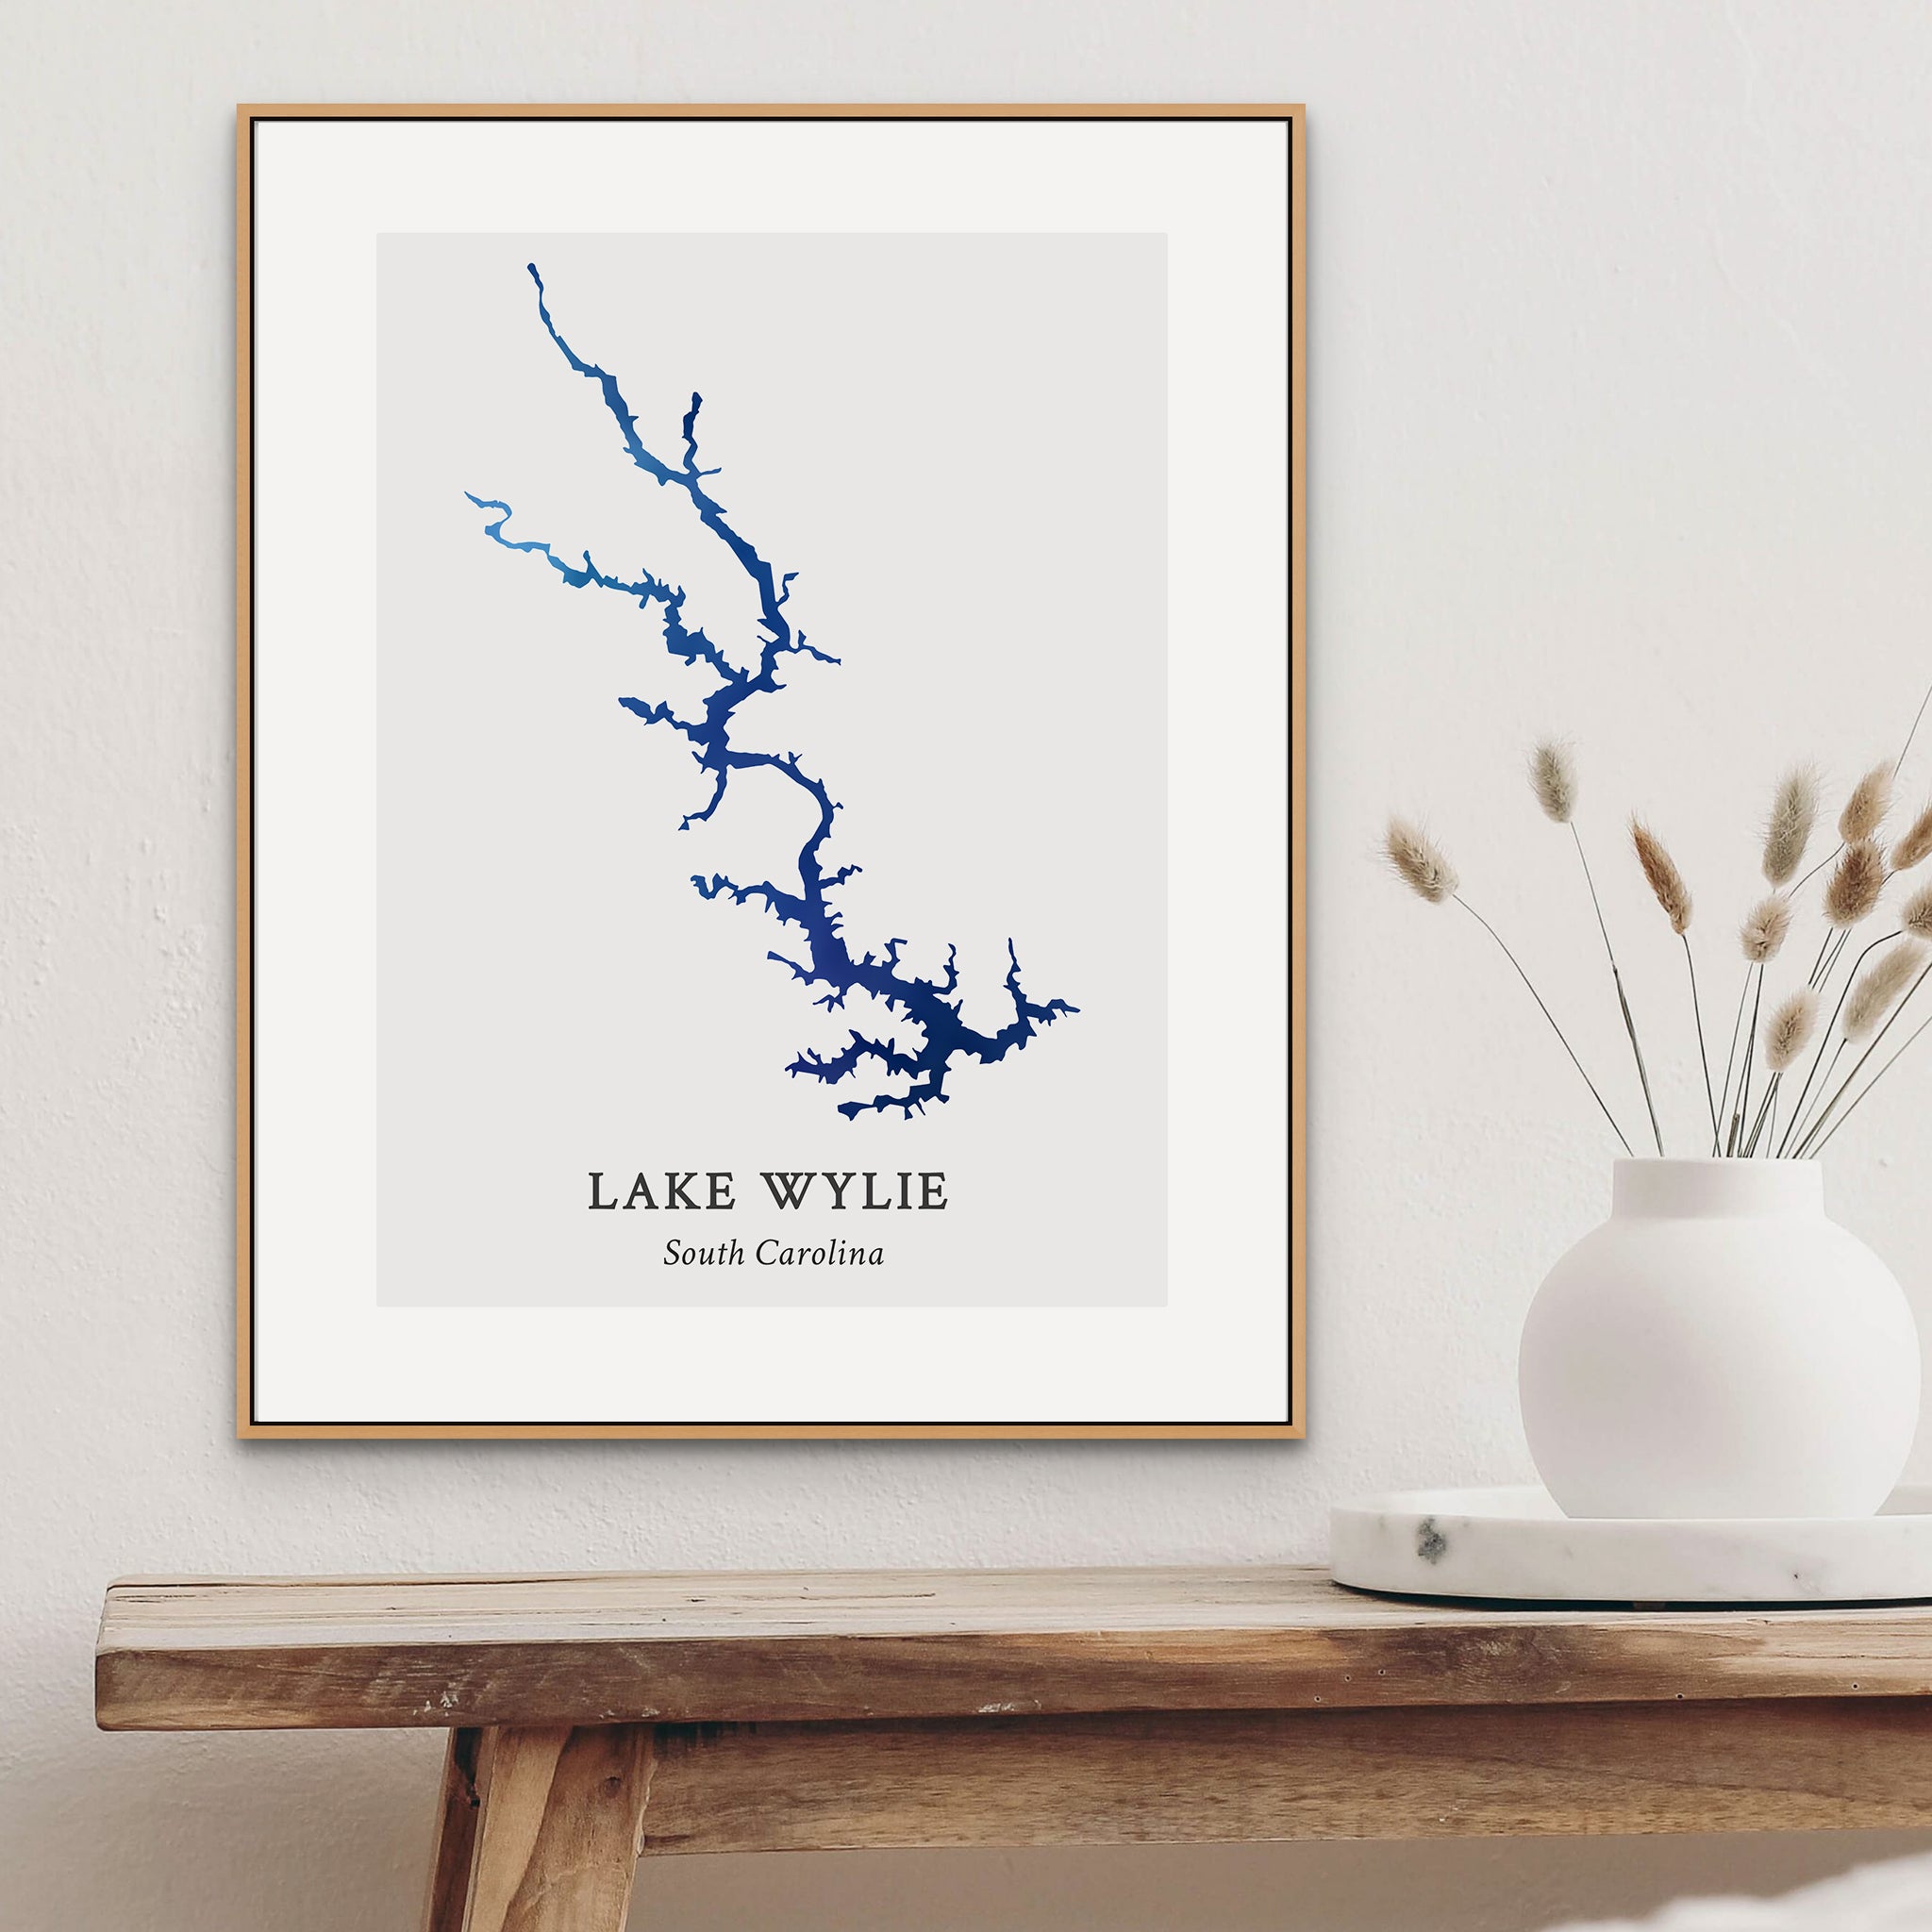 South Carolina - Lake Wylie